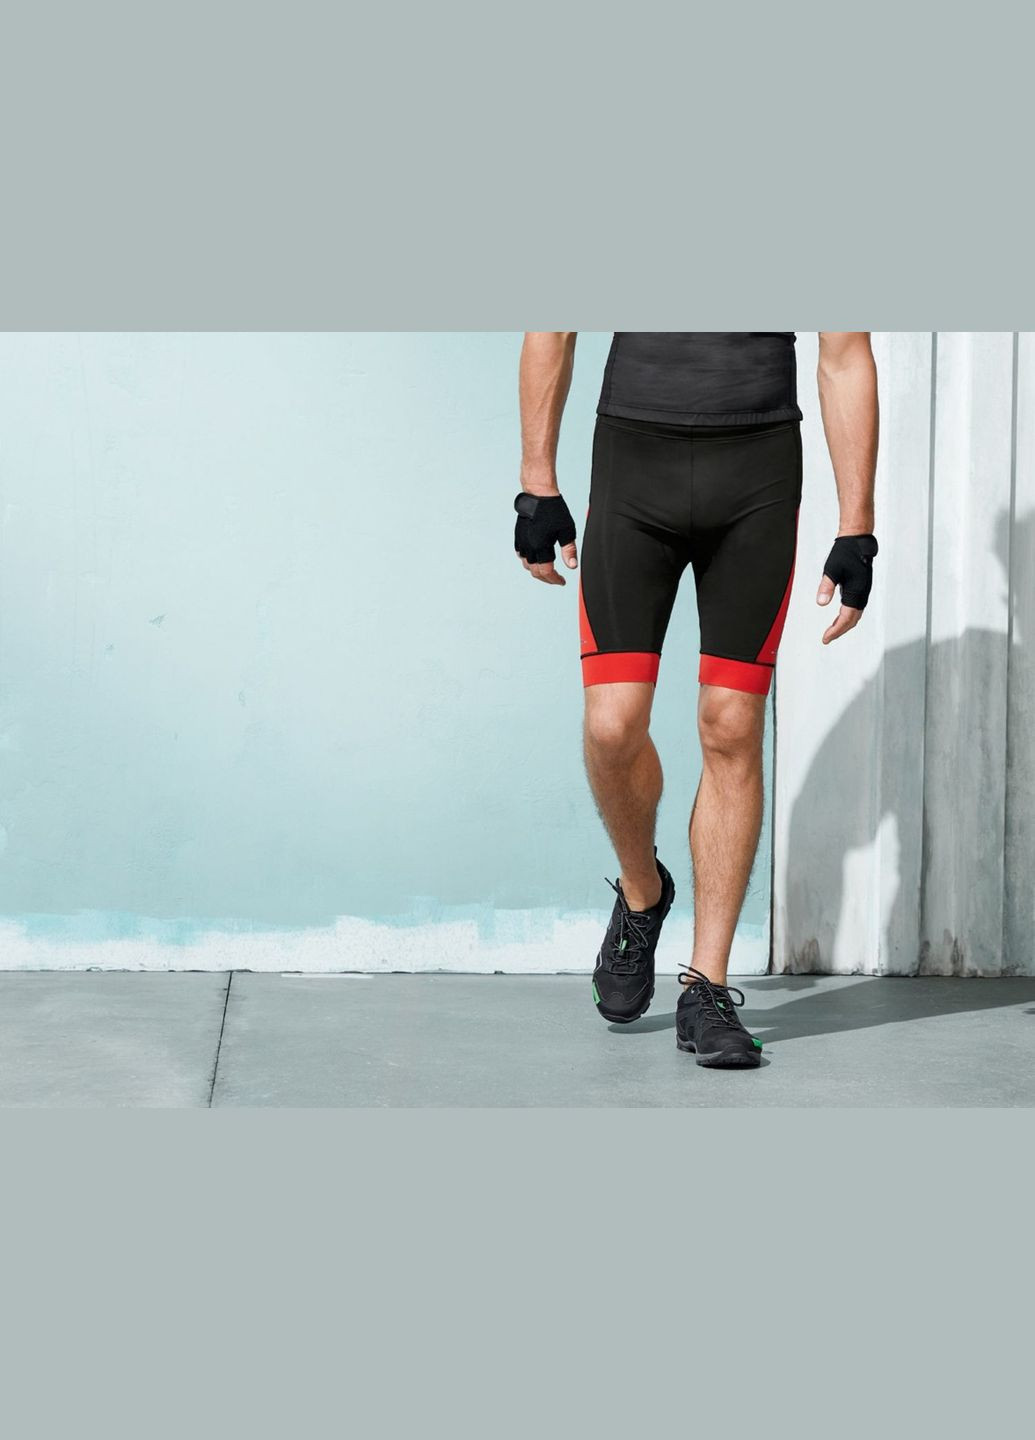 Велошорты с памперсом и карманом для мужчины COOMAX freshFX 318175 L Crivit (276254656)